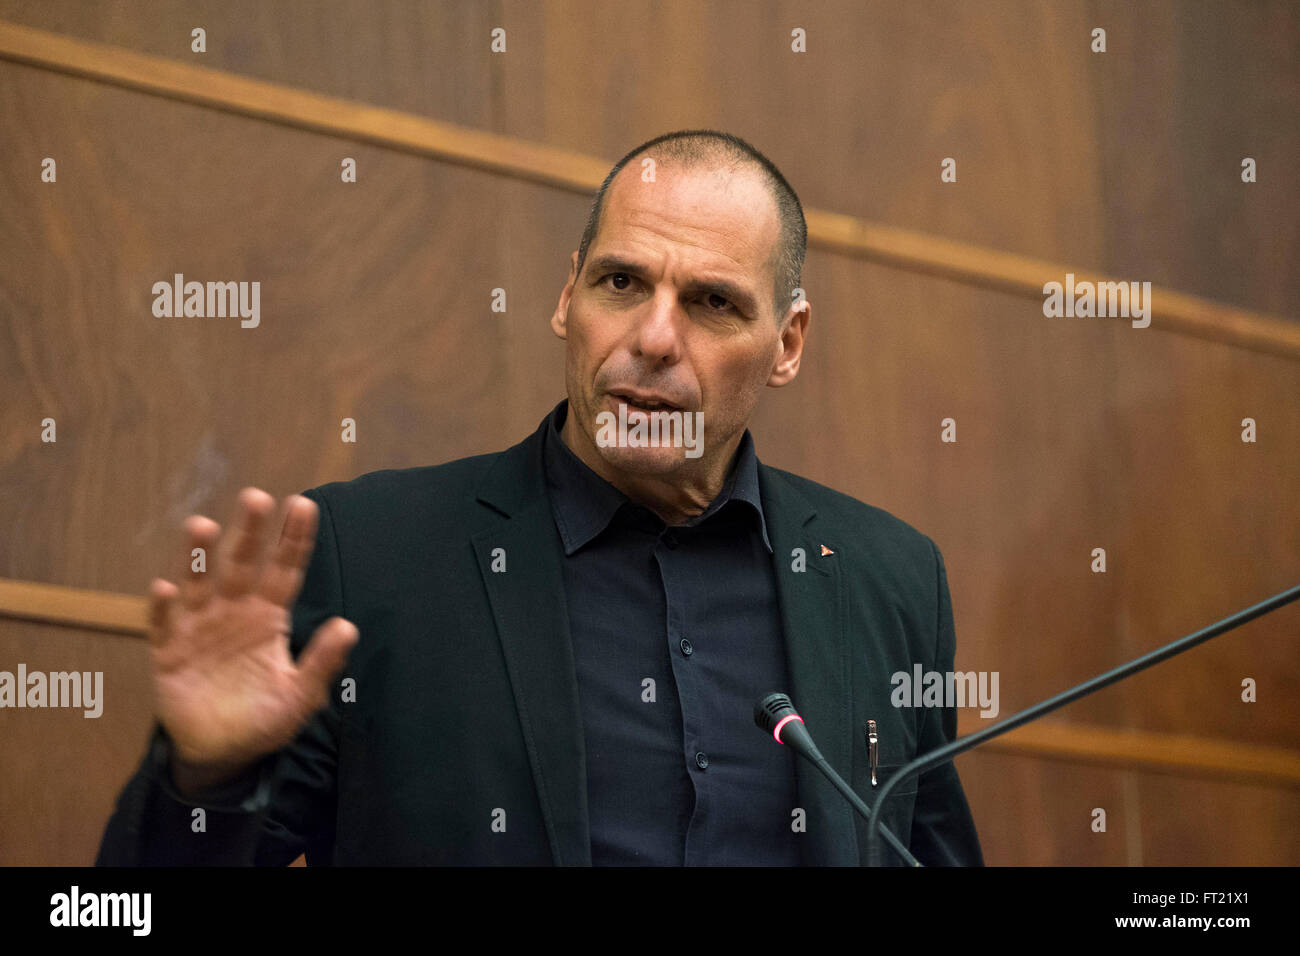 Former Finance Minister of Greece Yanis Varoufakis giving a speech Stock Photo